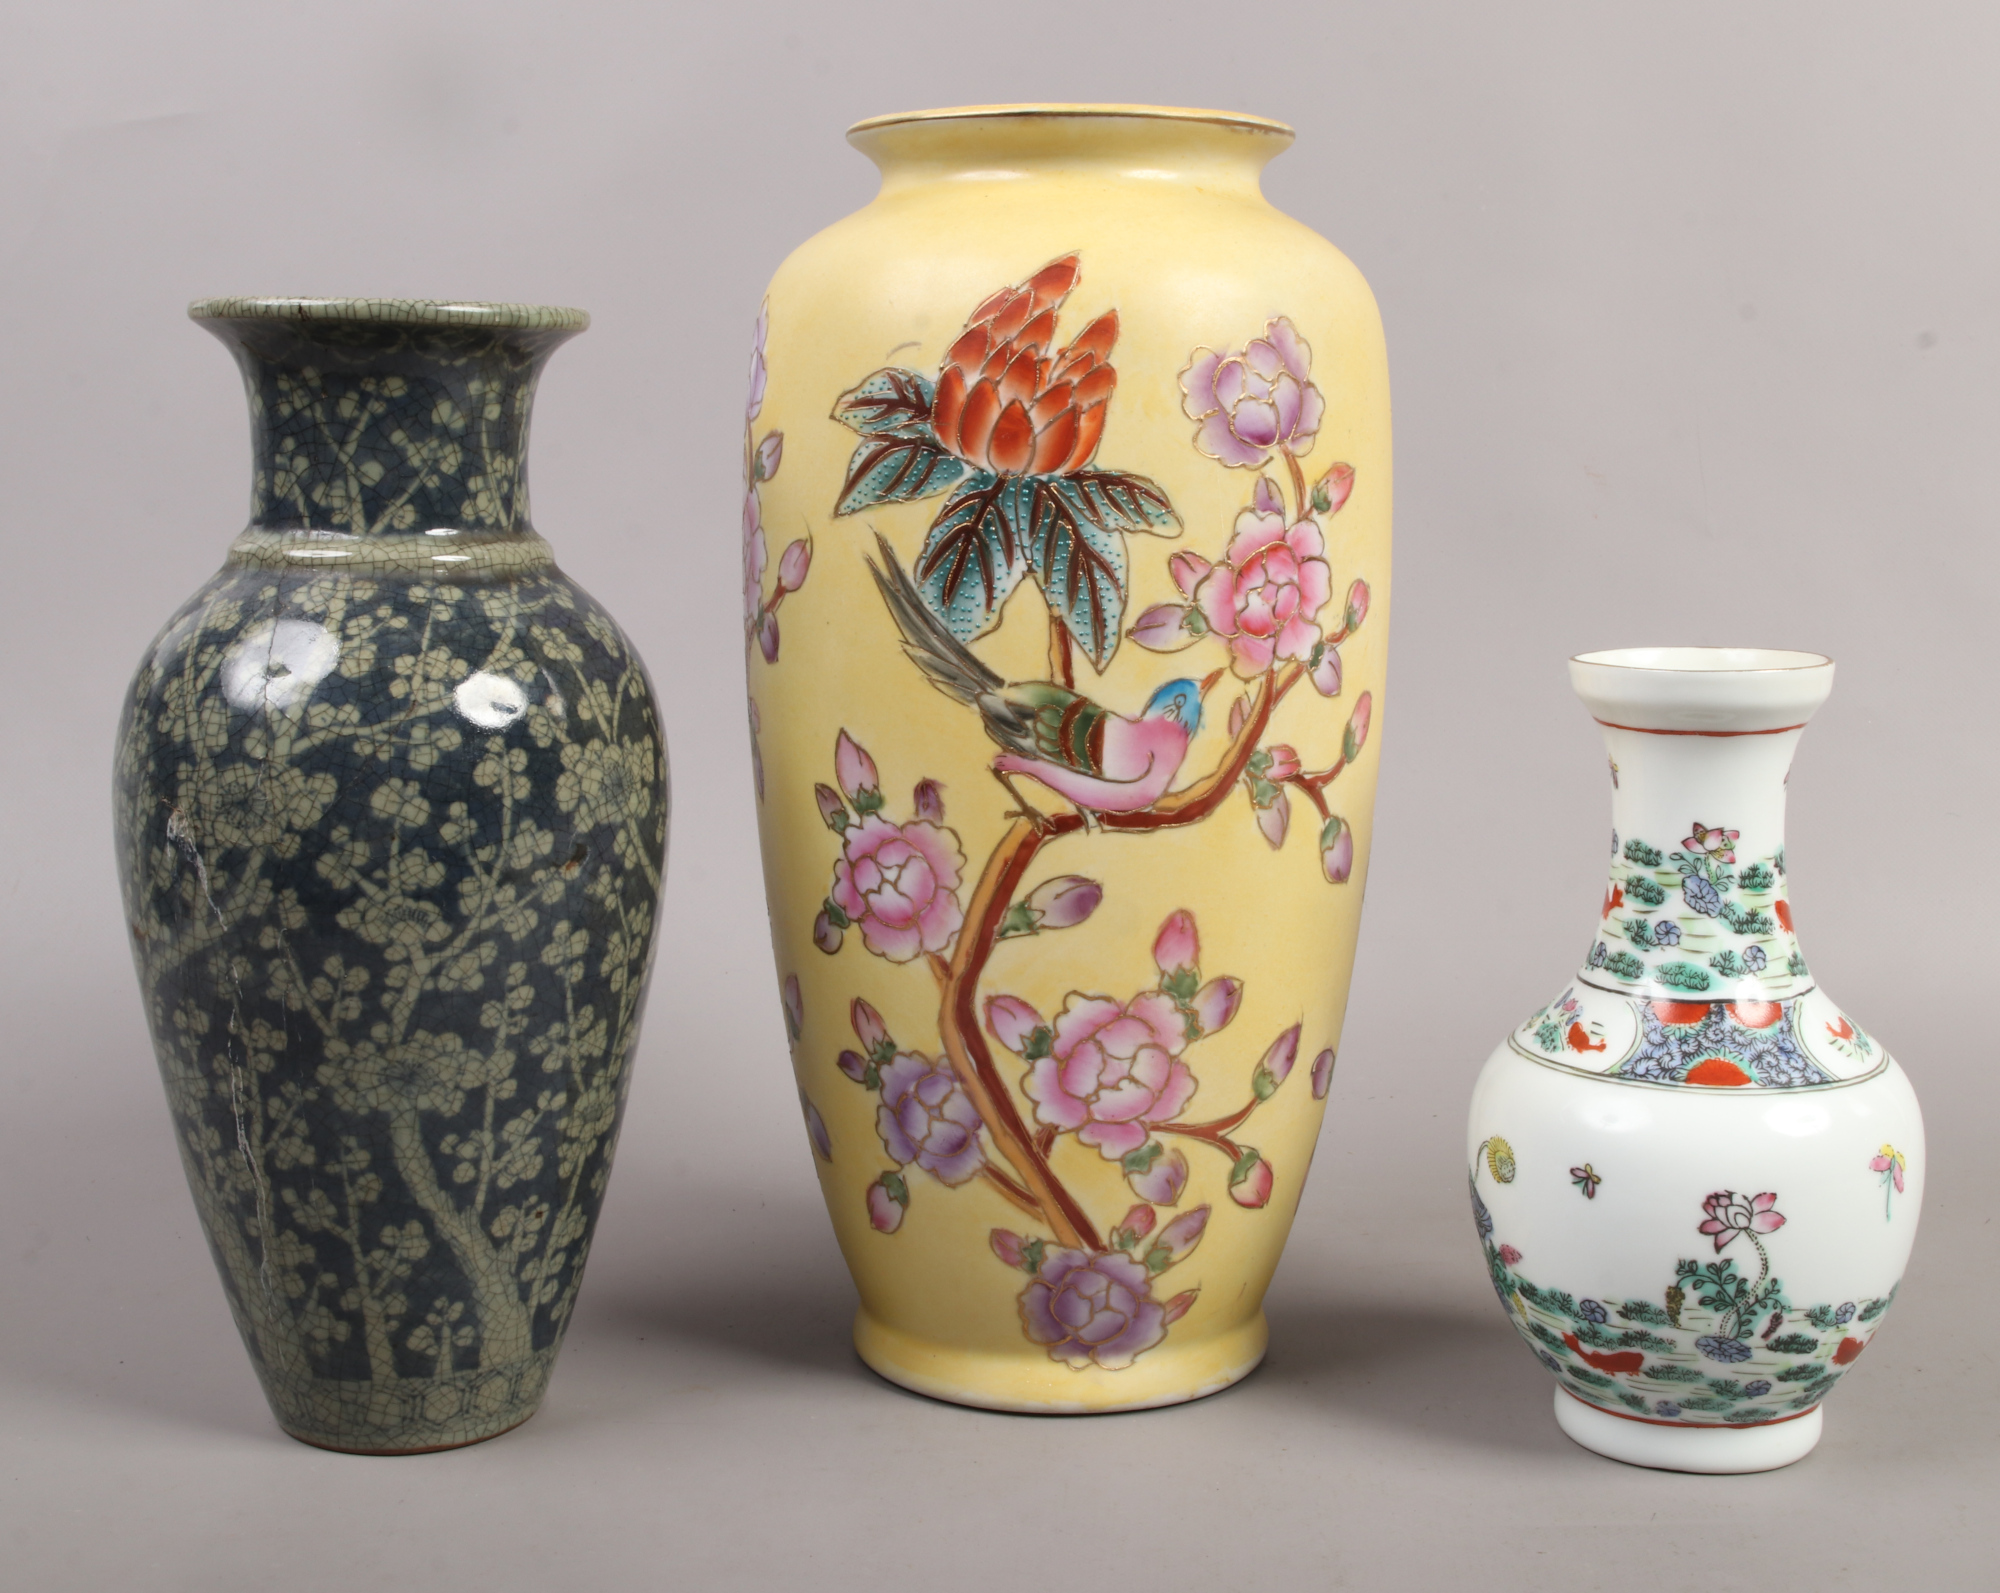 Three decorative Chinese vases.